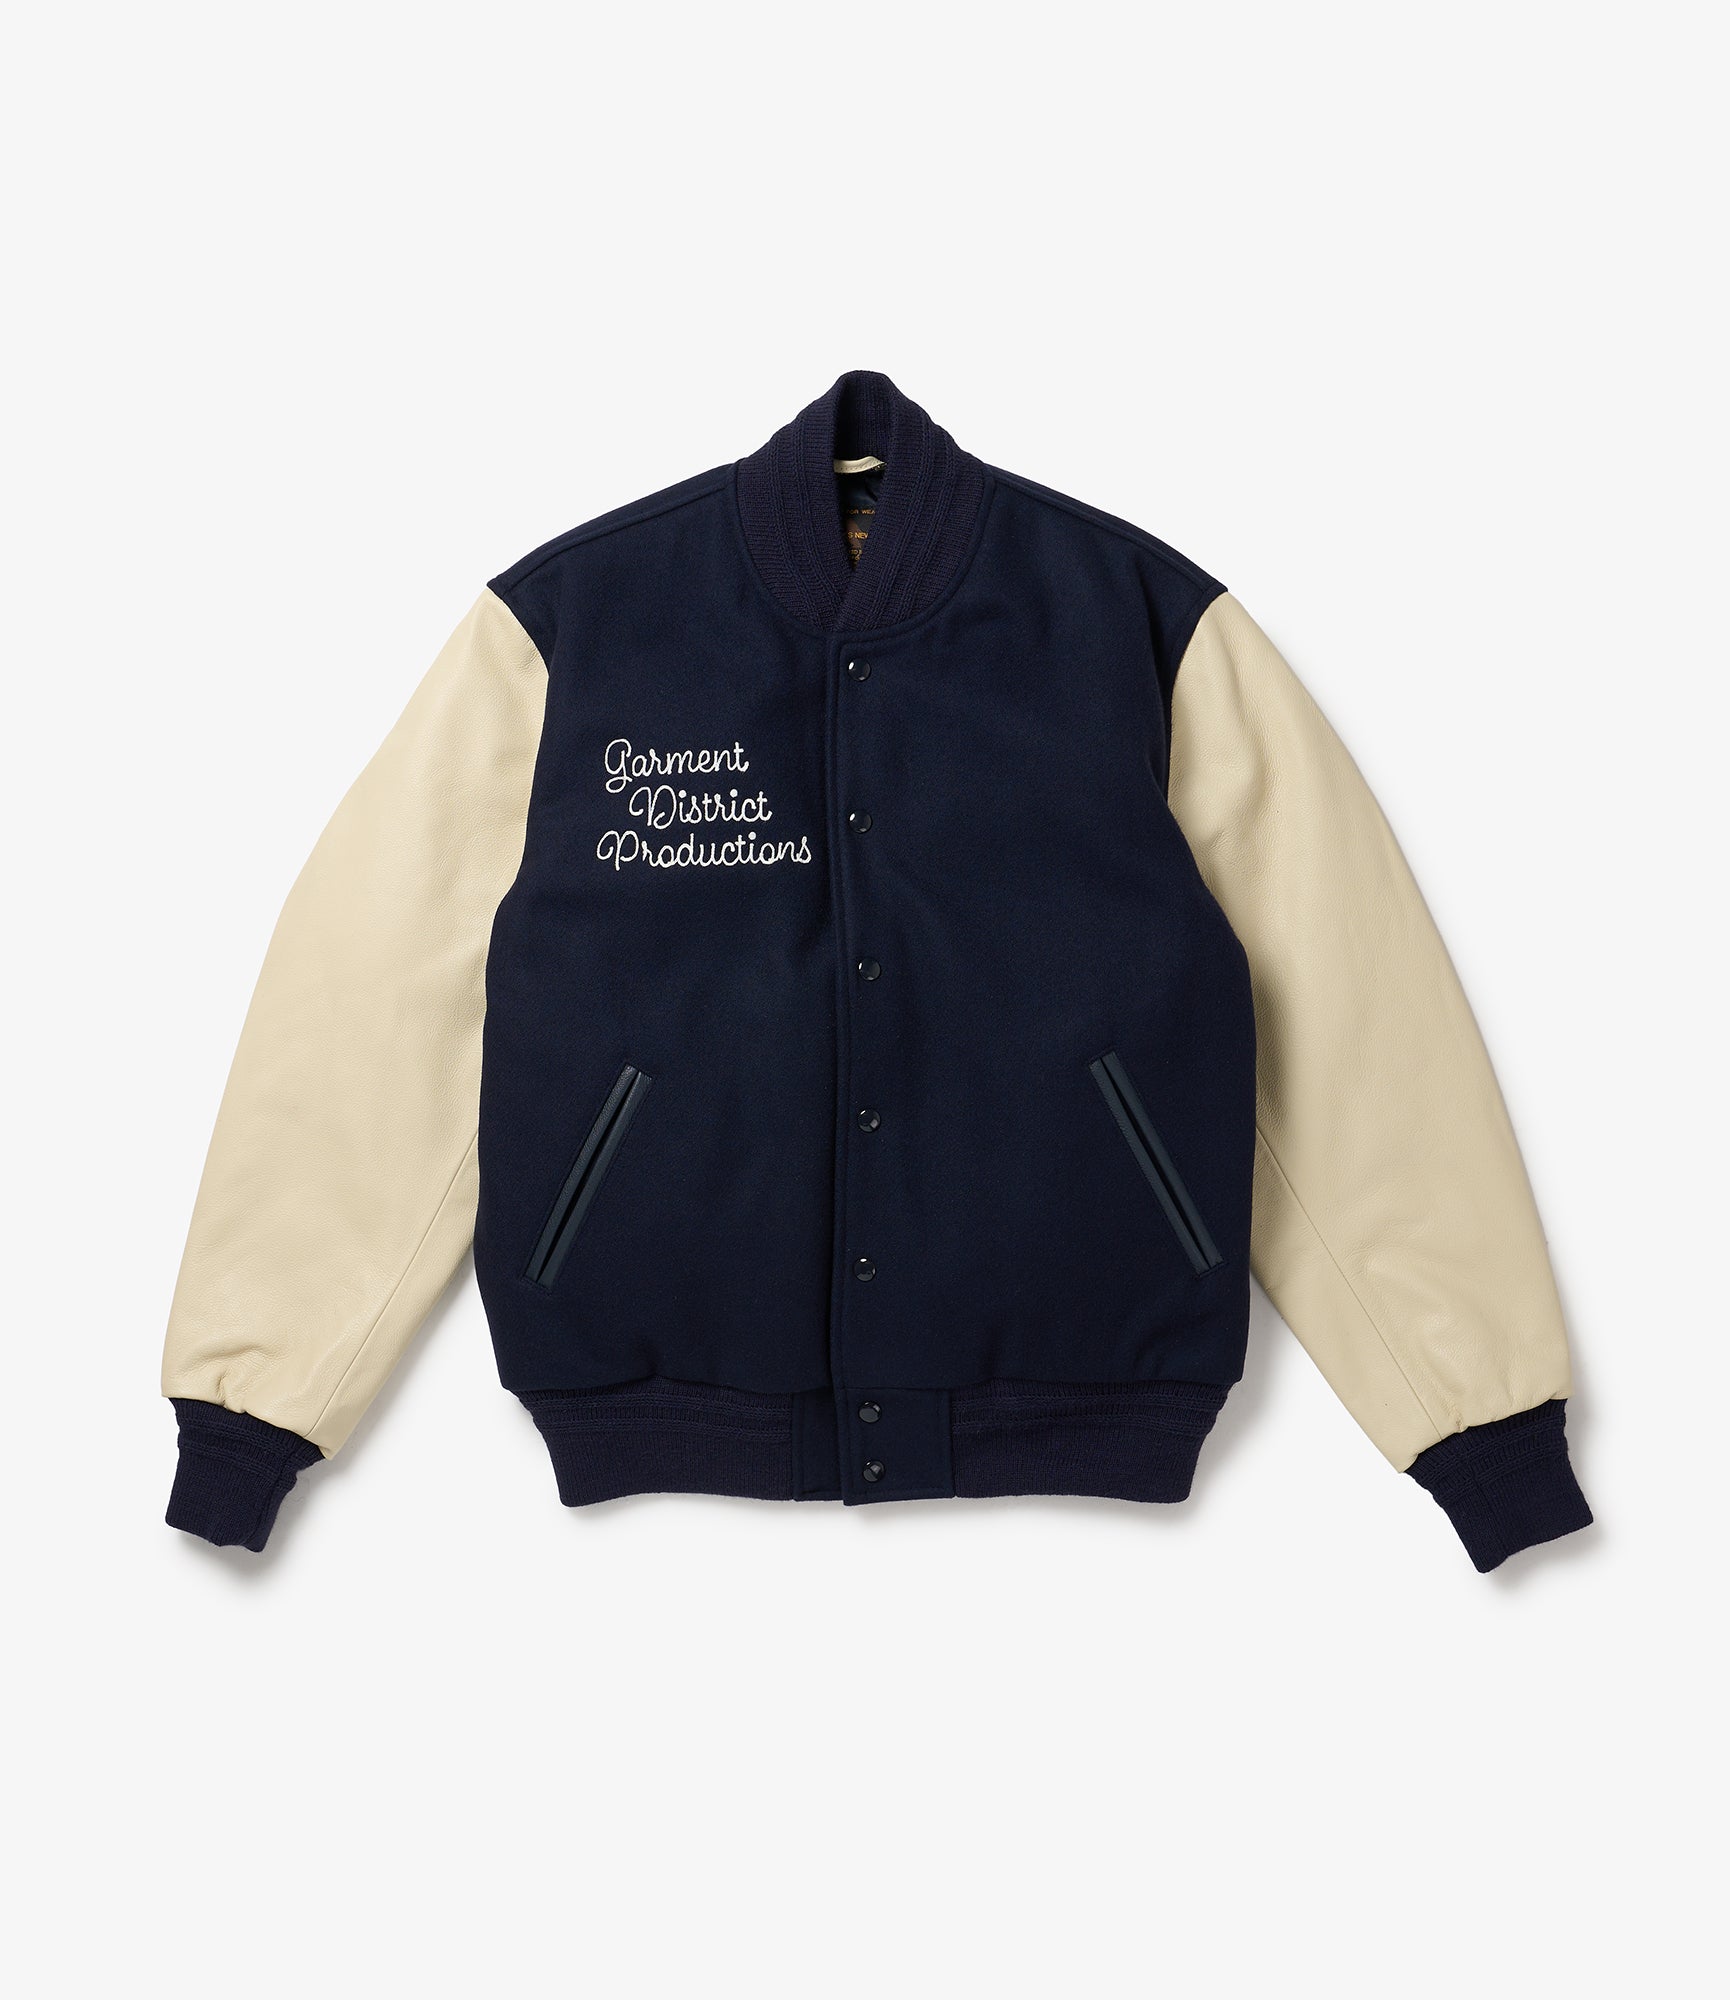 GDP x Golden Bear Varsity Jacket - Navy/Cream